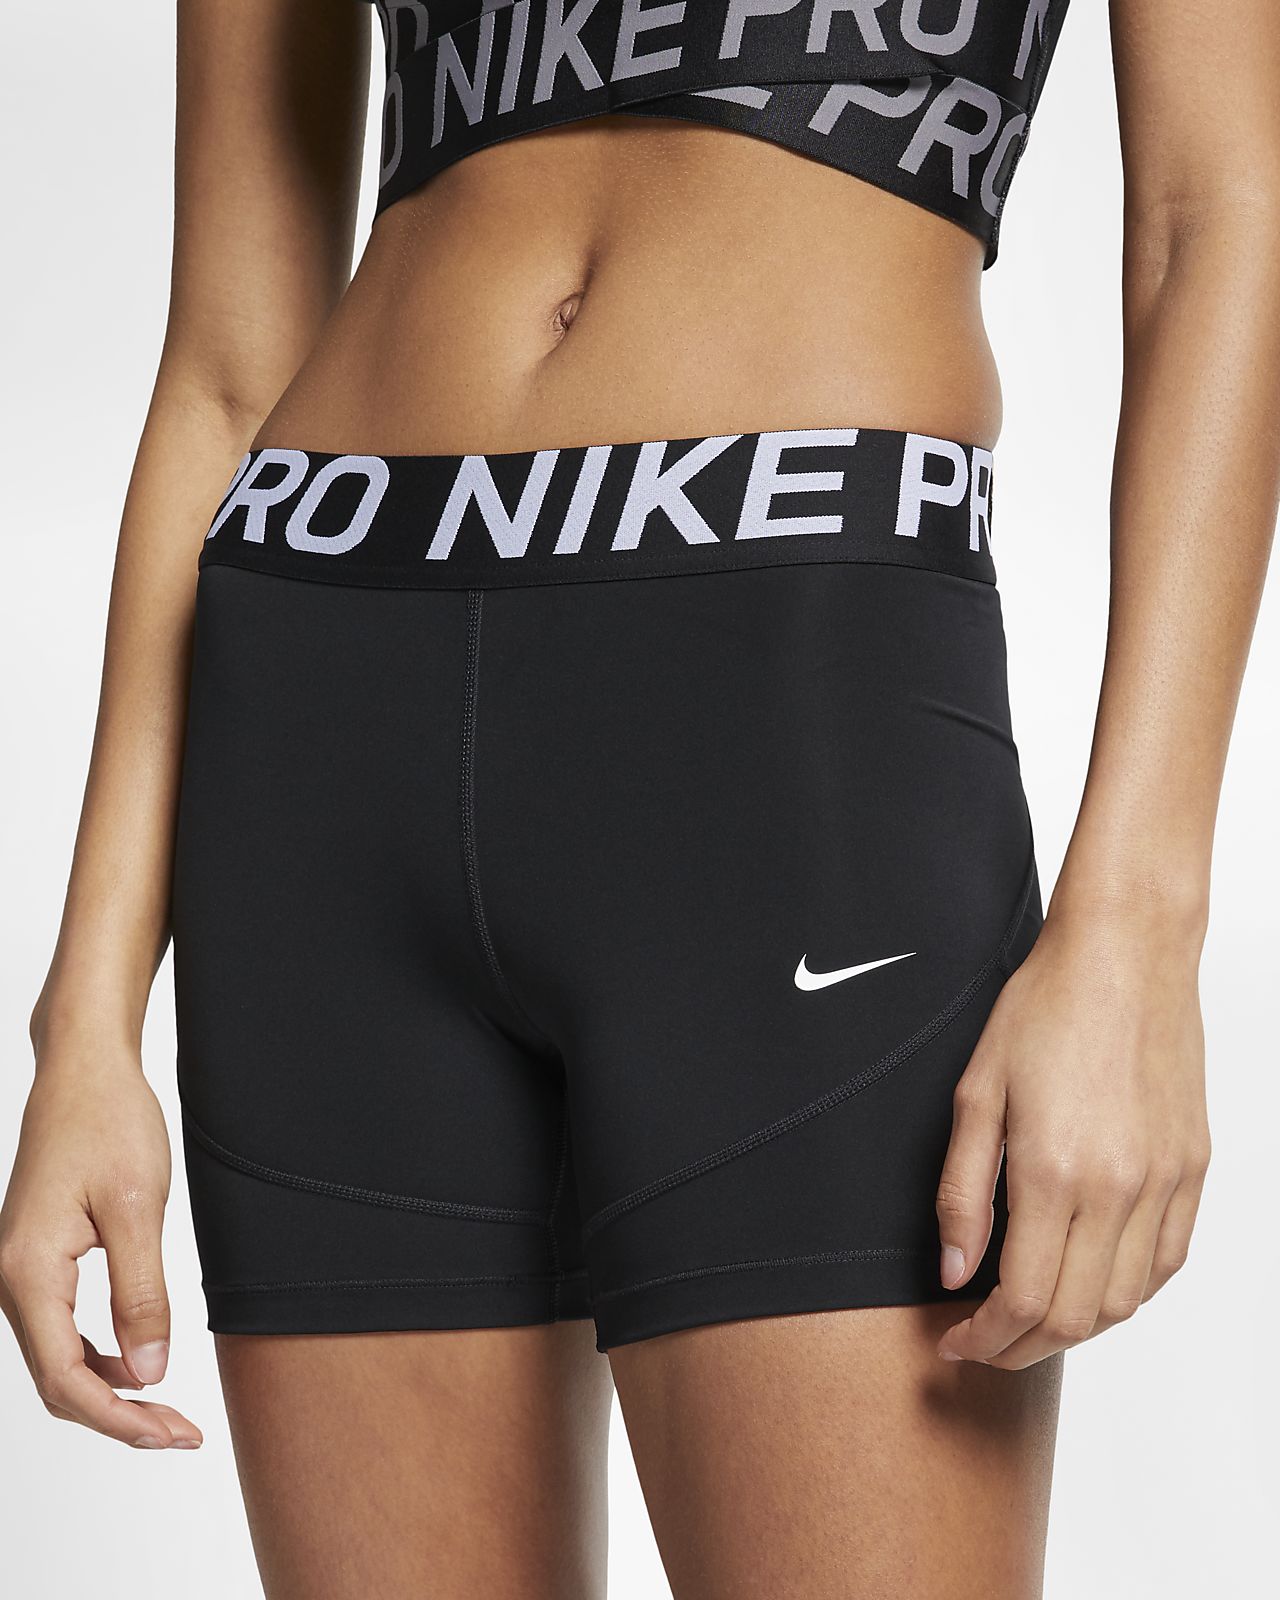 nike pro women's spandex shorts on sale 